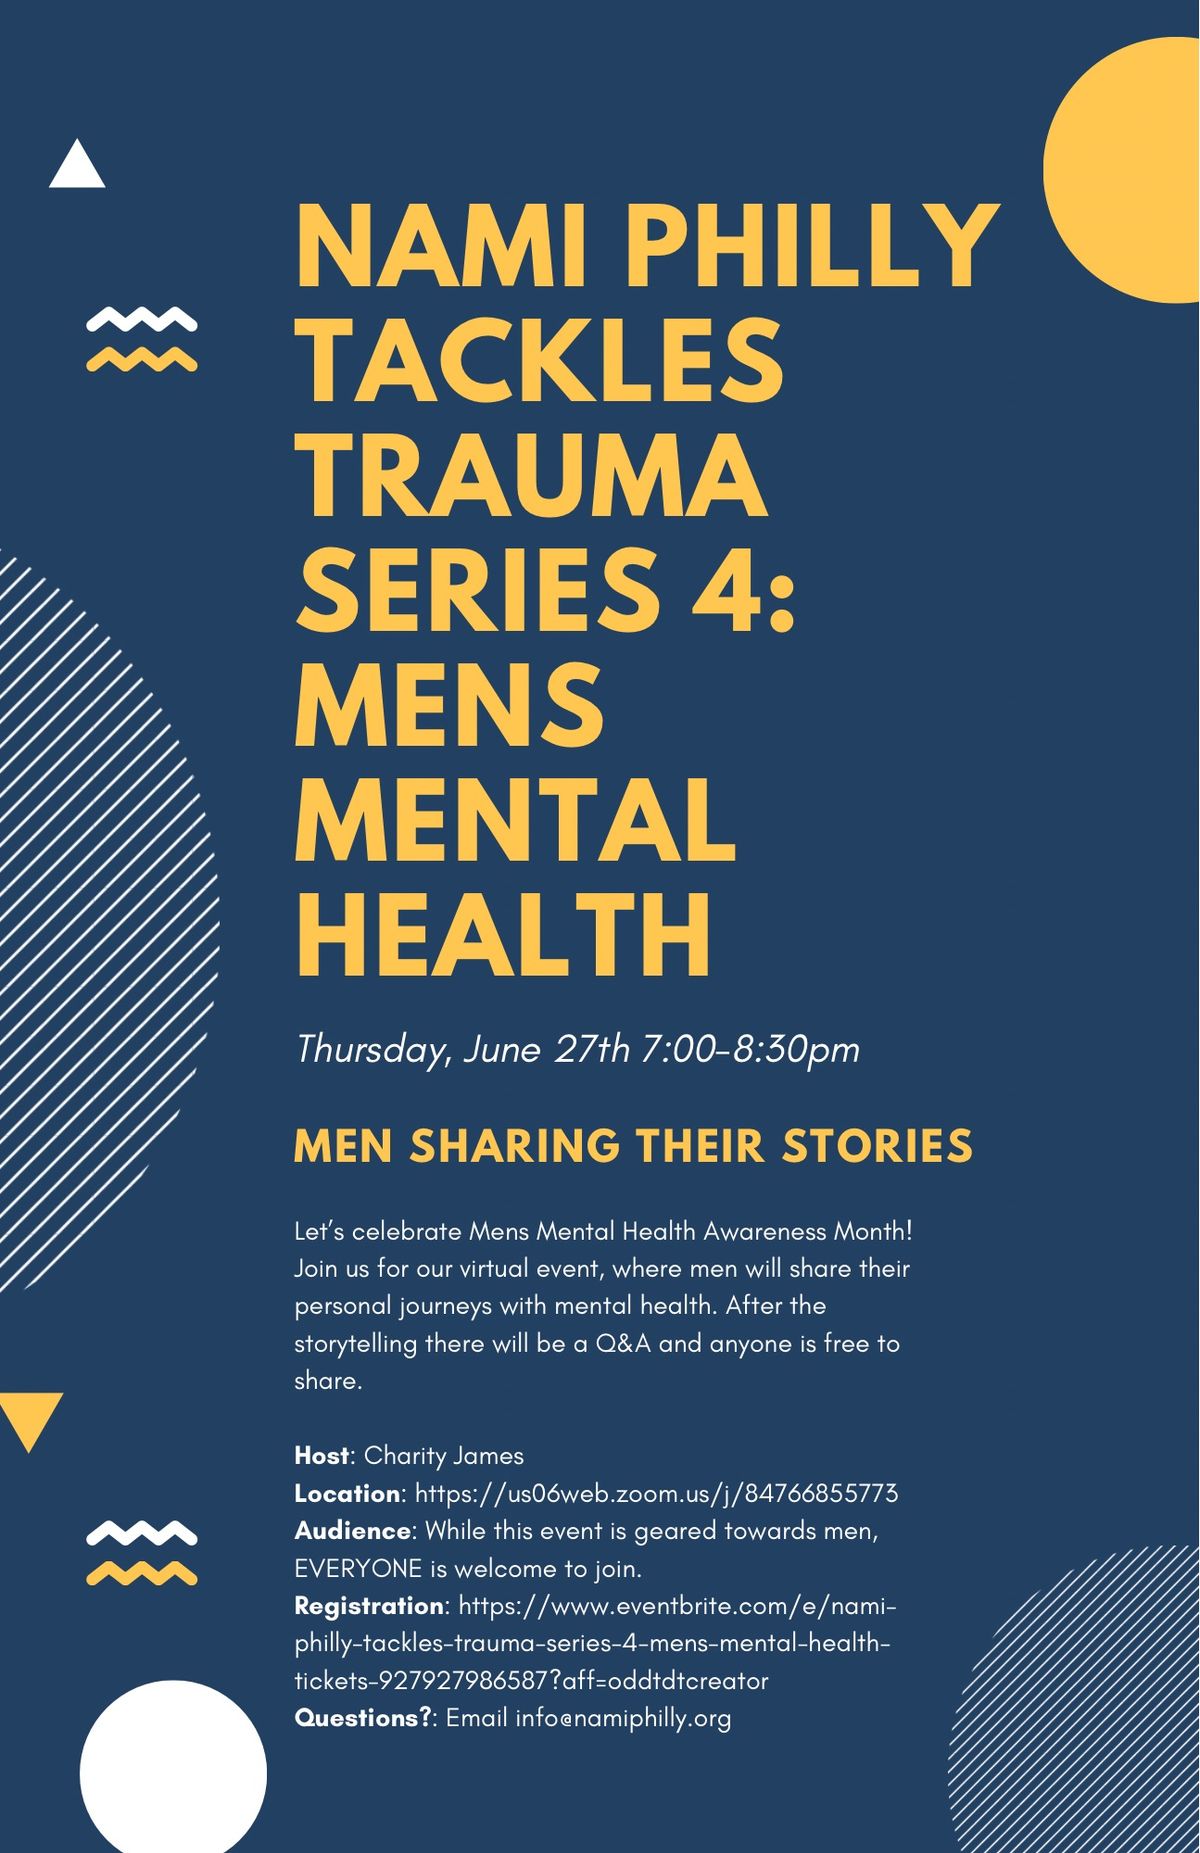 NAMI Philly Tackles Trauma Series 4: Men's Mental Health